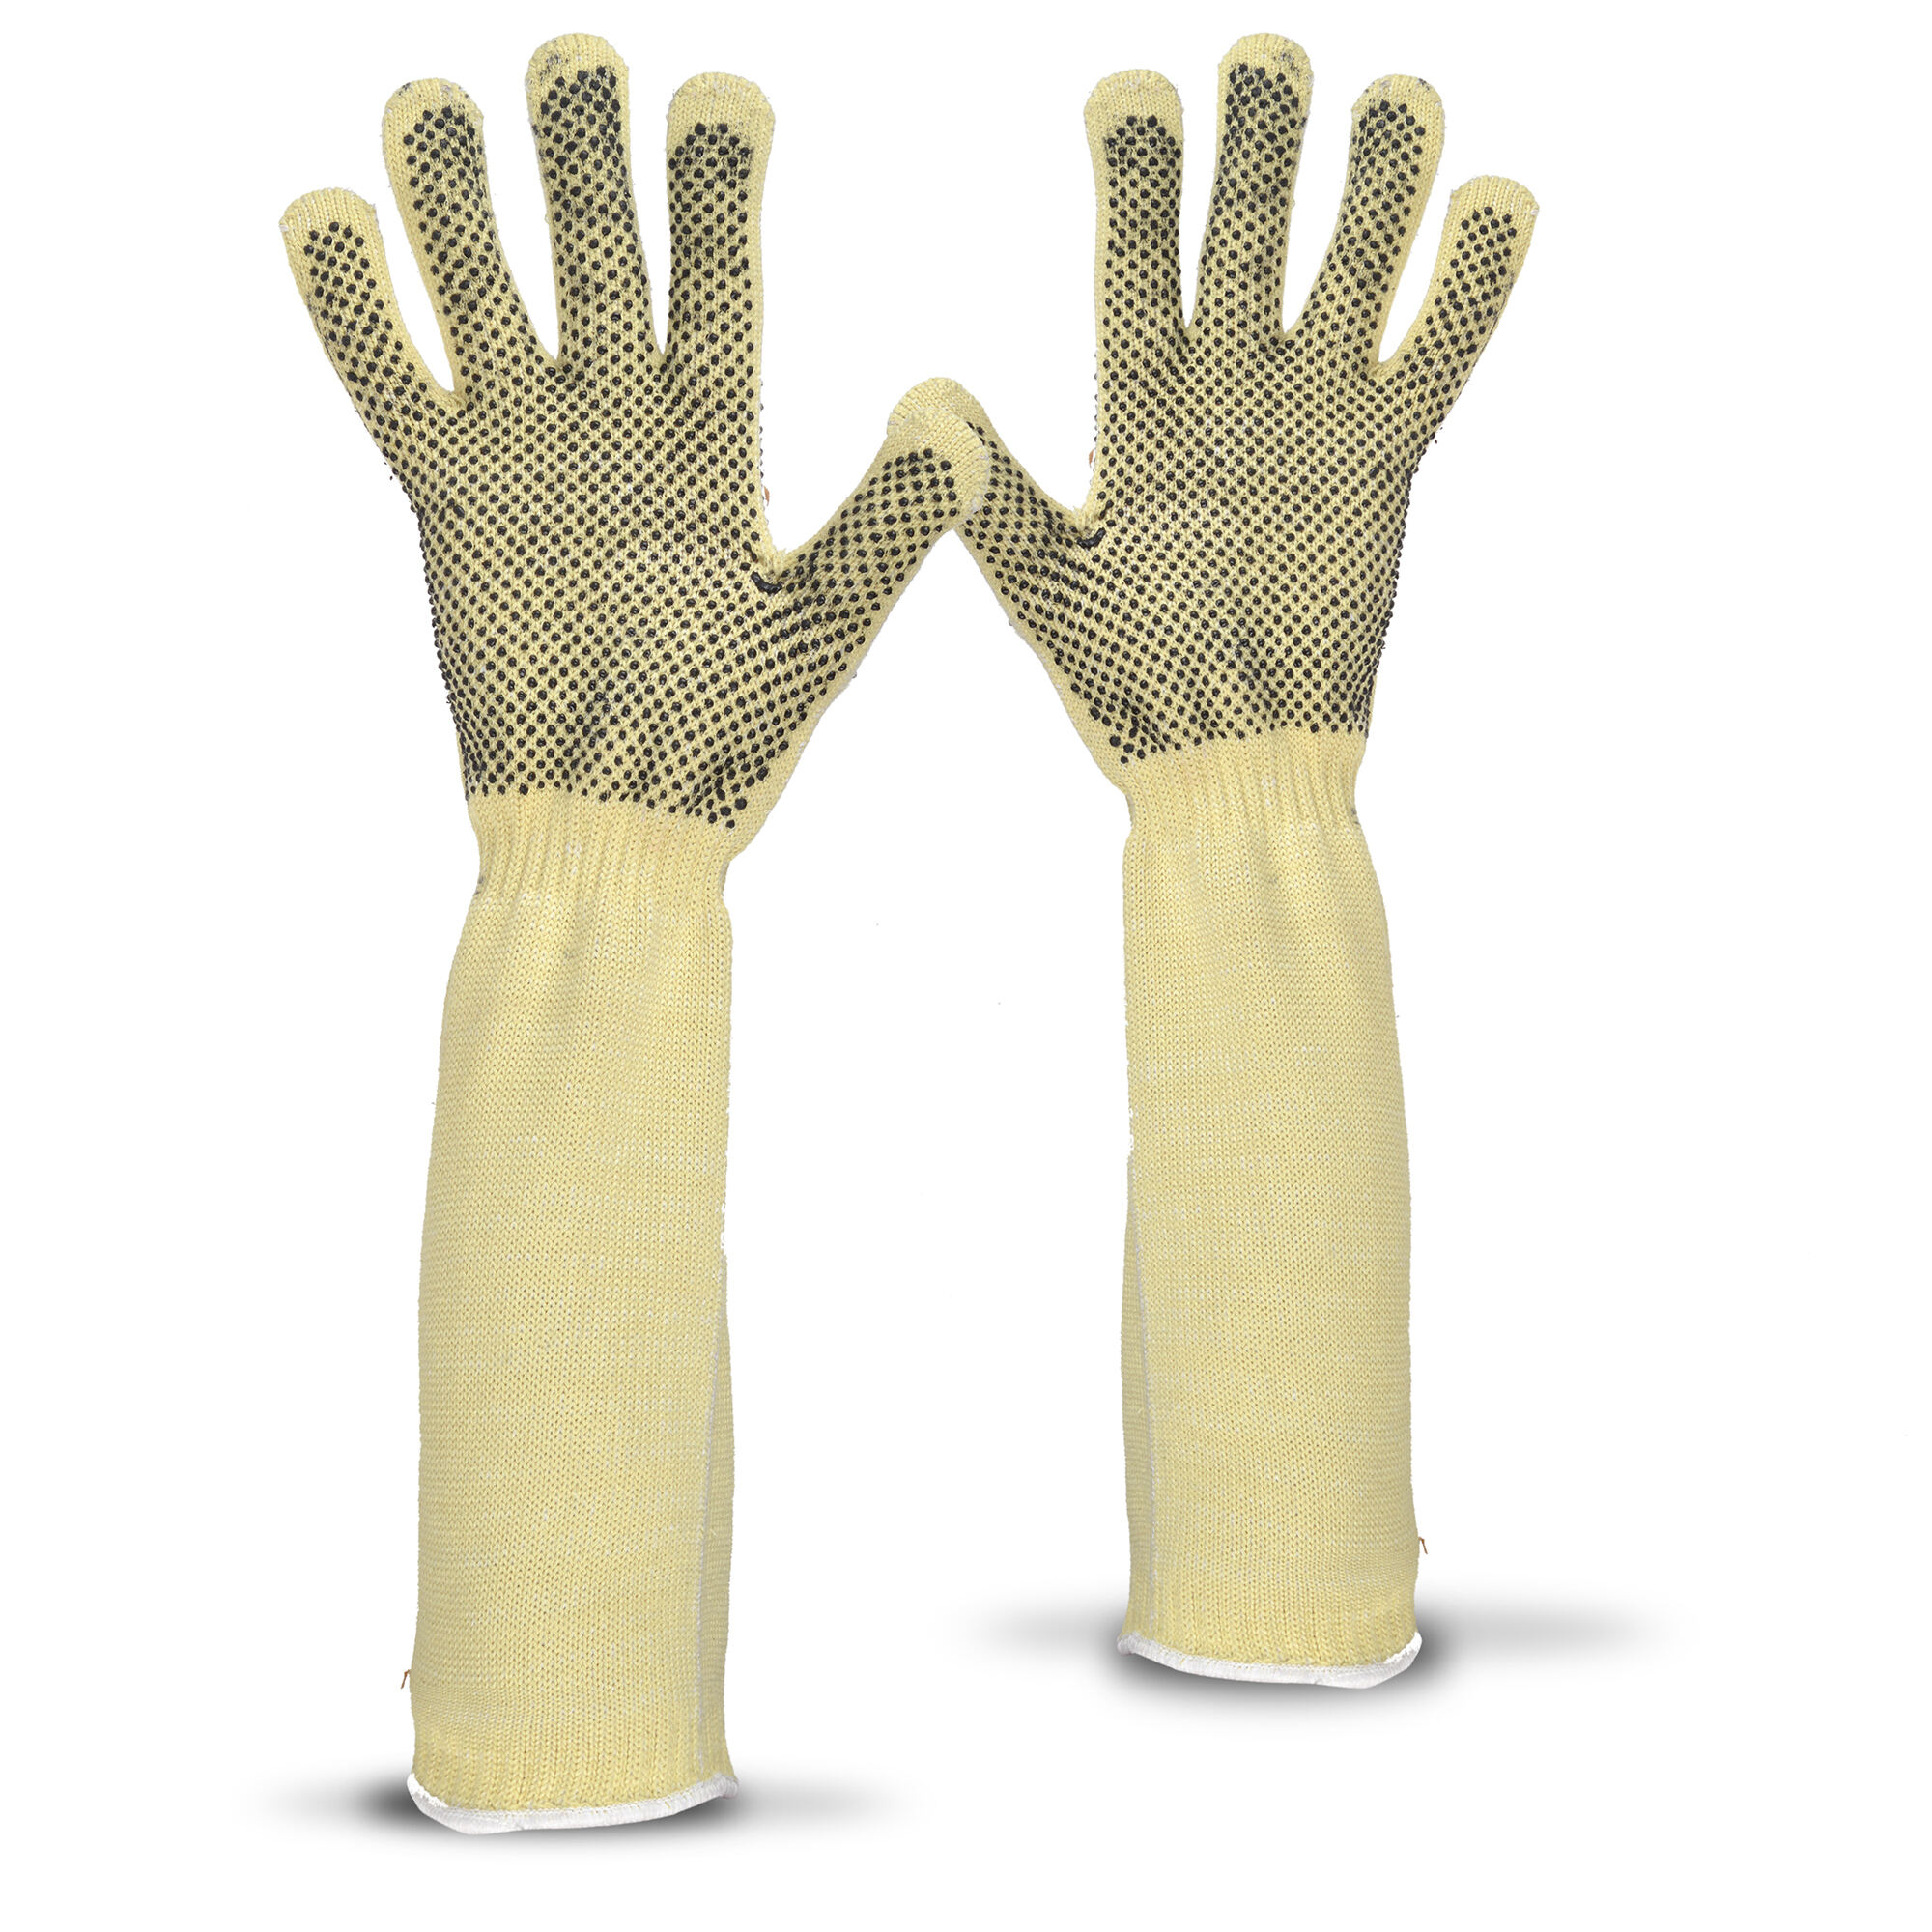 Wells Lamont Heavy Duty Work Gloves with Leather Palm, Medium (Wells Lamont  3300M), Blue/Tan